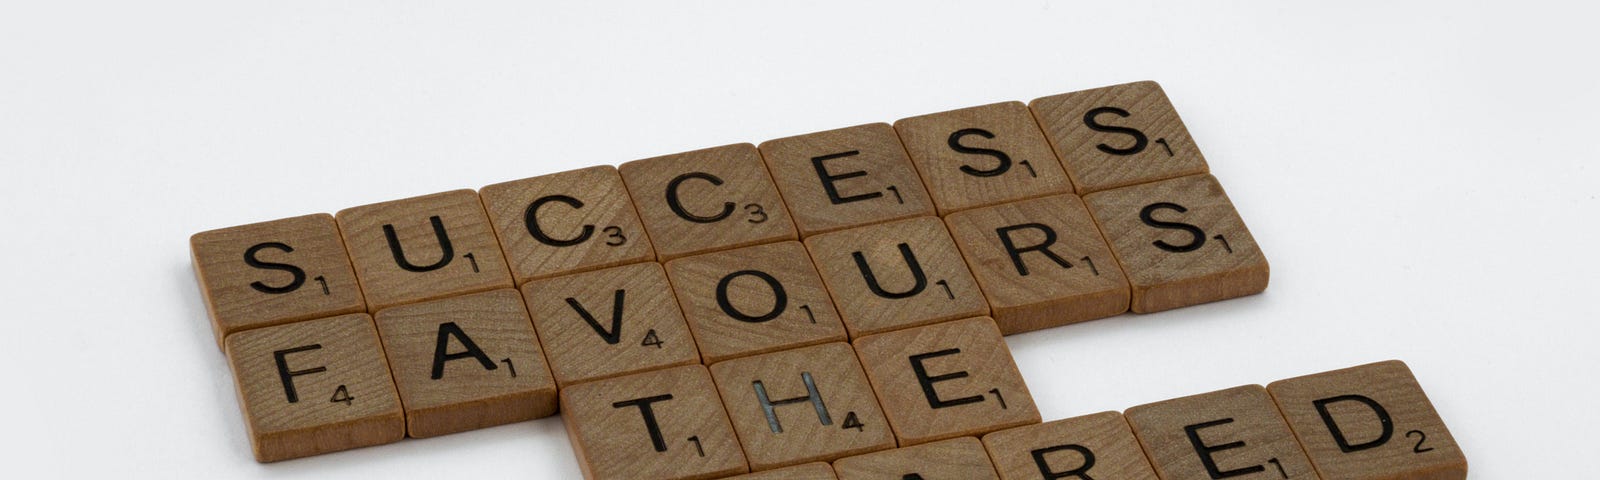 Scrabble pieces spelling out Success Favours The Prepared